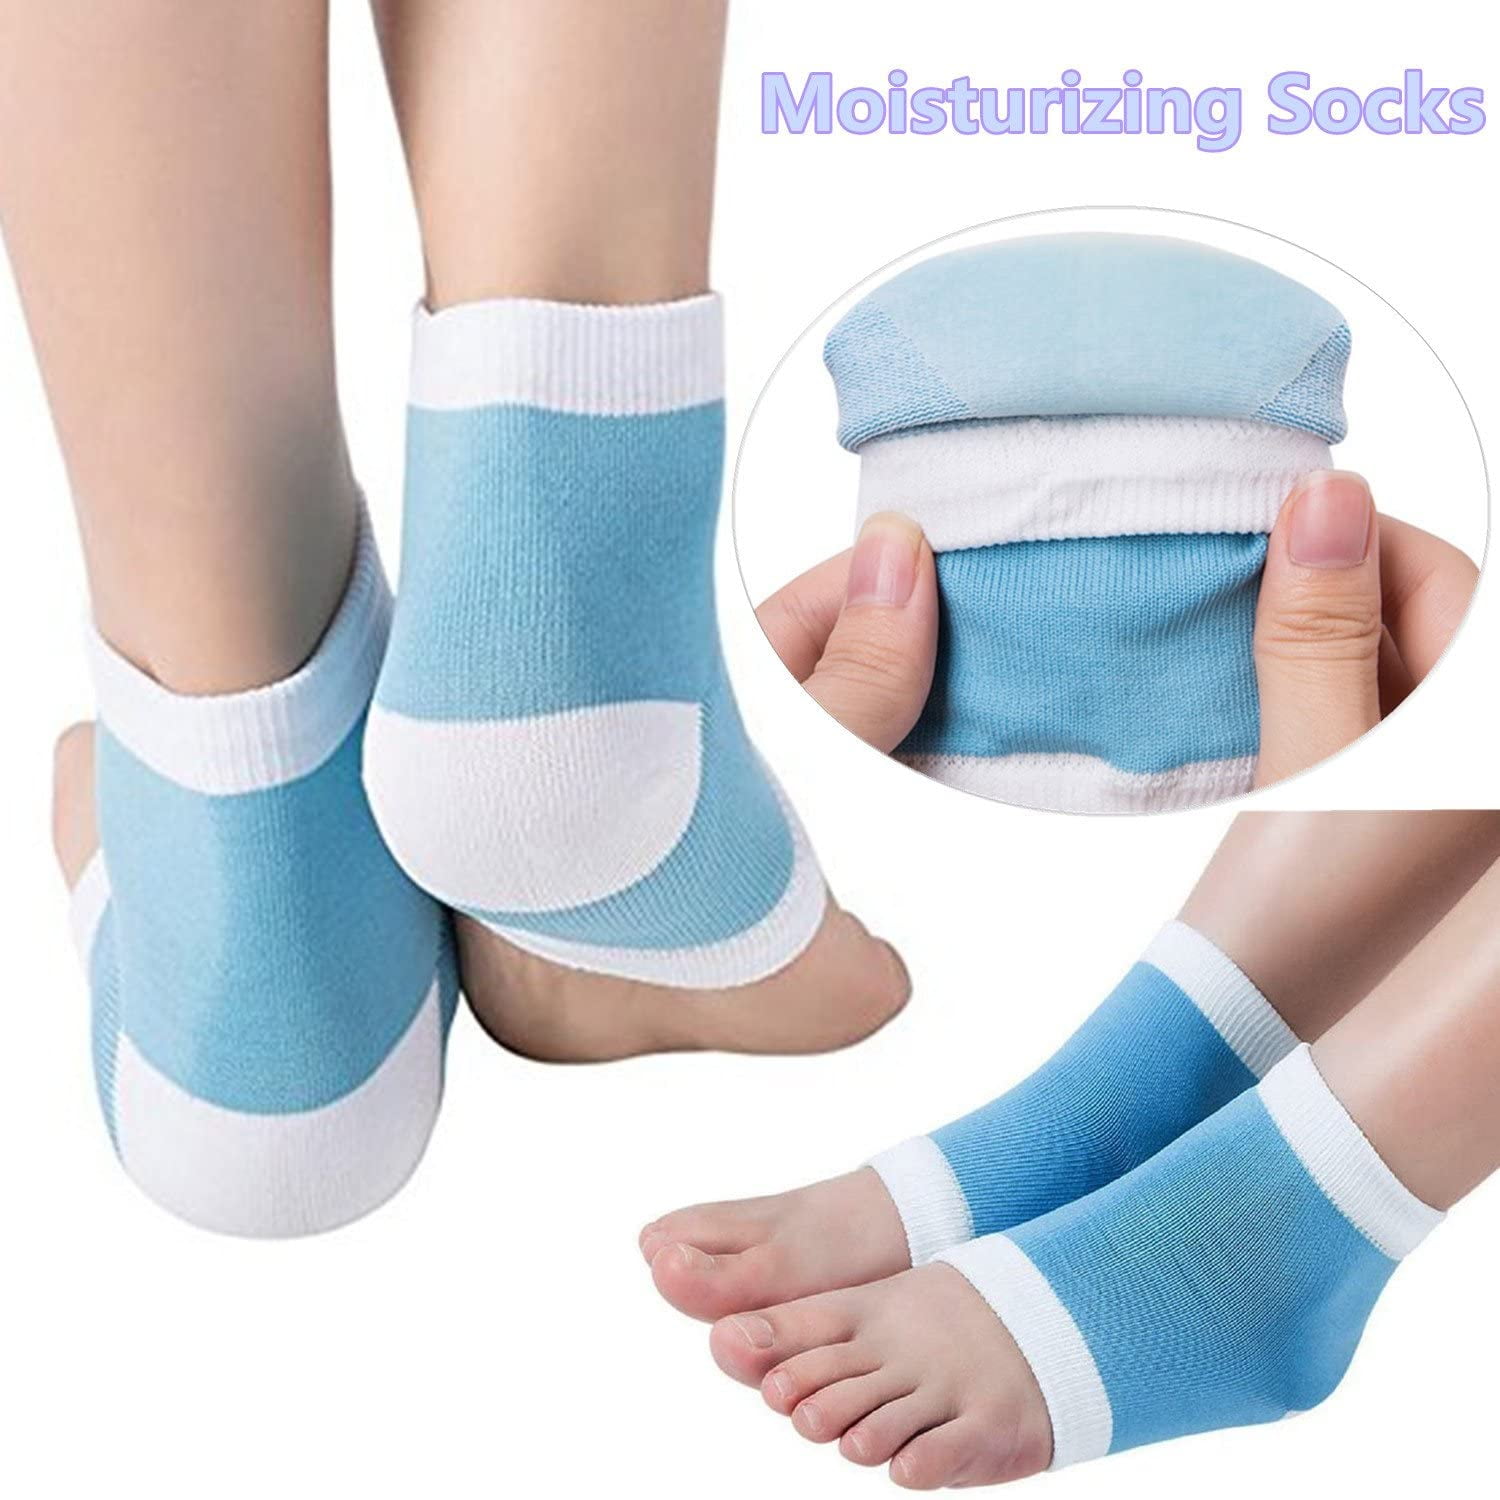 ZenToes Moisturizing Heel Socks to Treat Dry, Cracked Heels - 2 Pairs  (Regular, Cotton Black), 4 - Harris Teeter